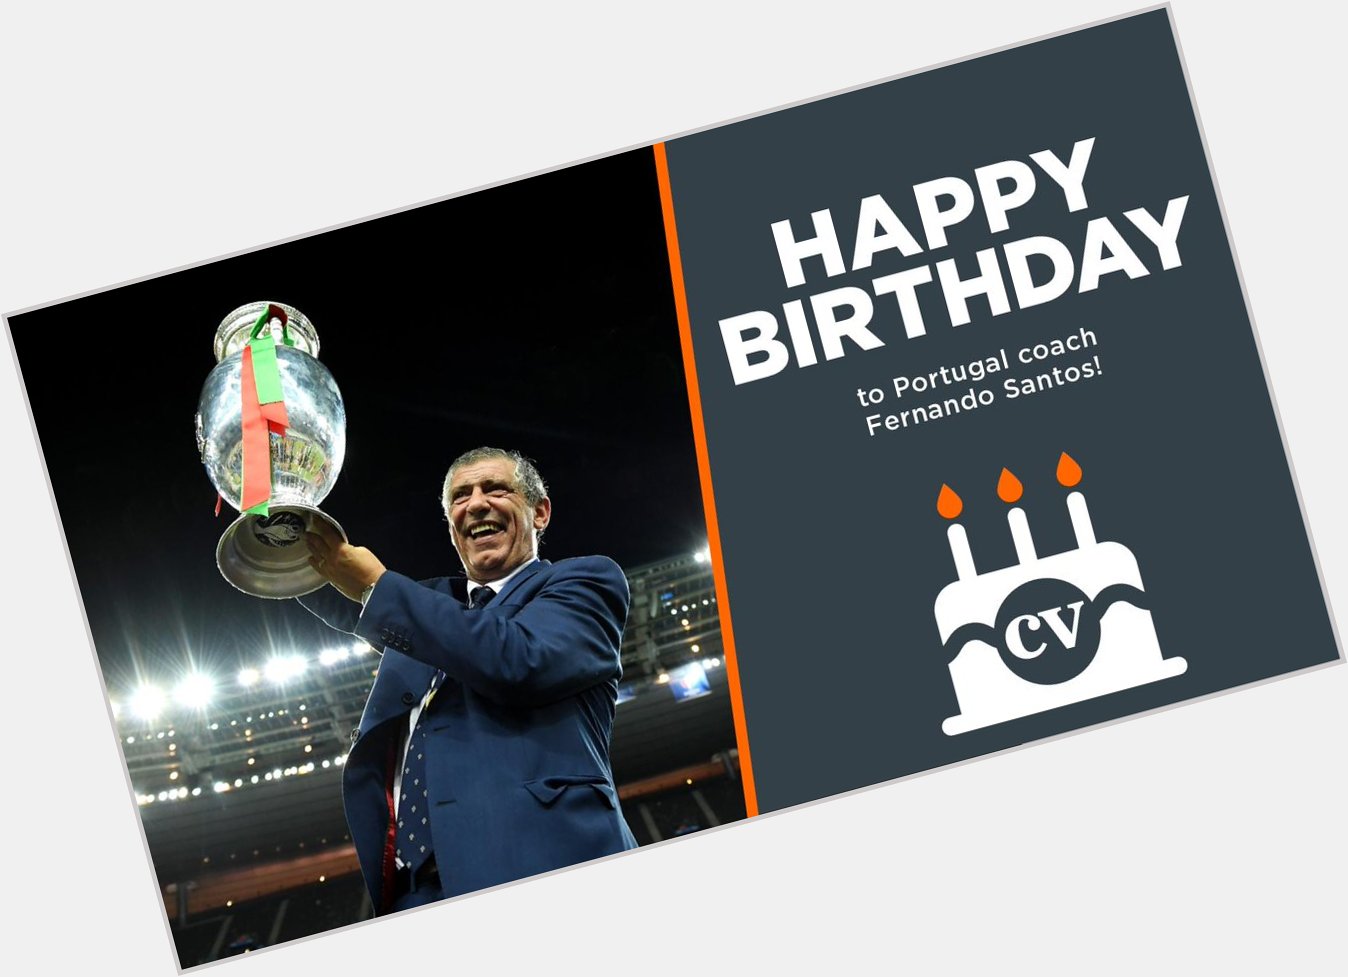   Happy birthday to Portugal coach Fernando Santos! 